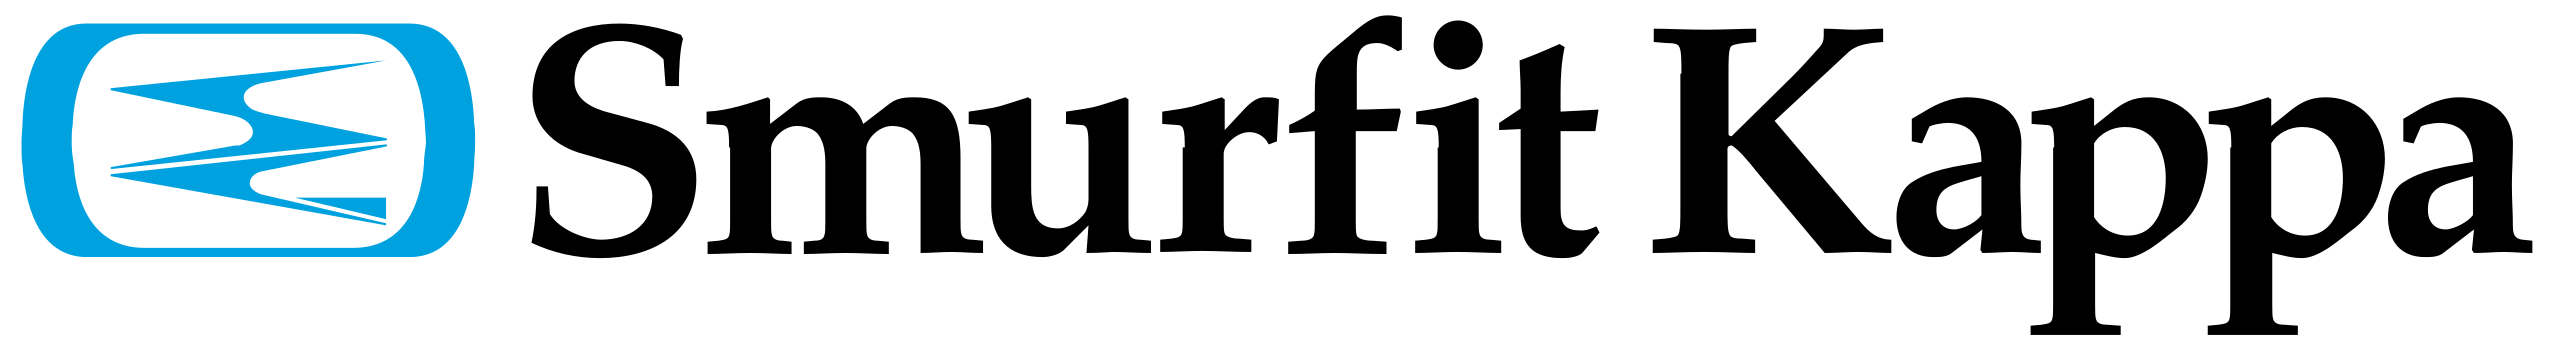 Logo Smurfit Kappa.